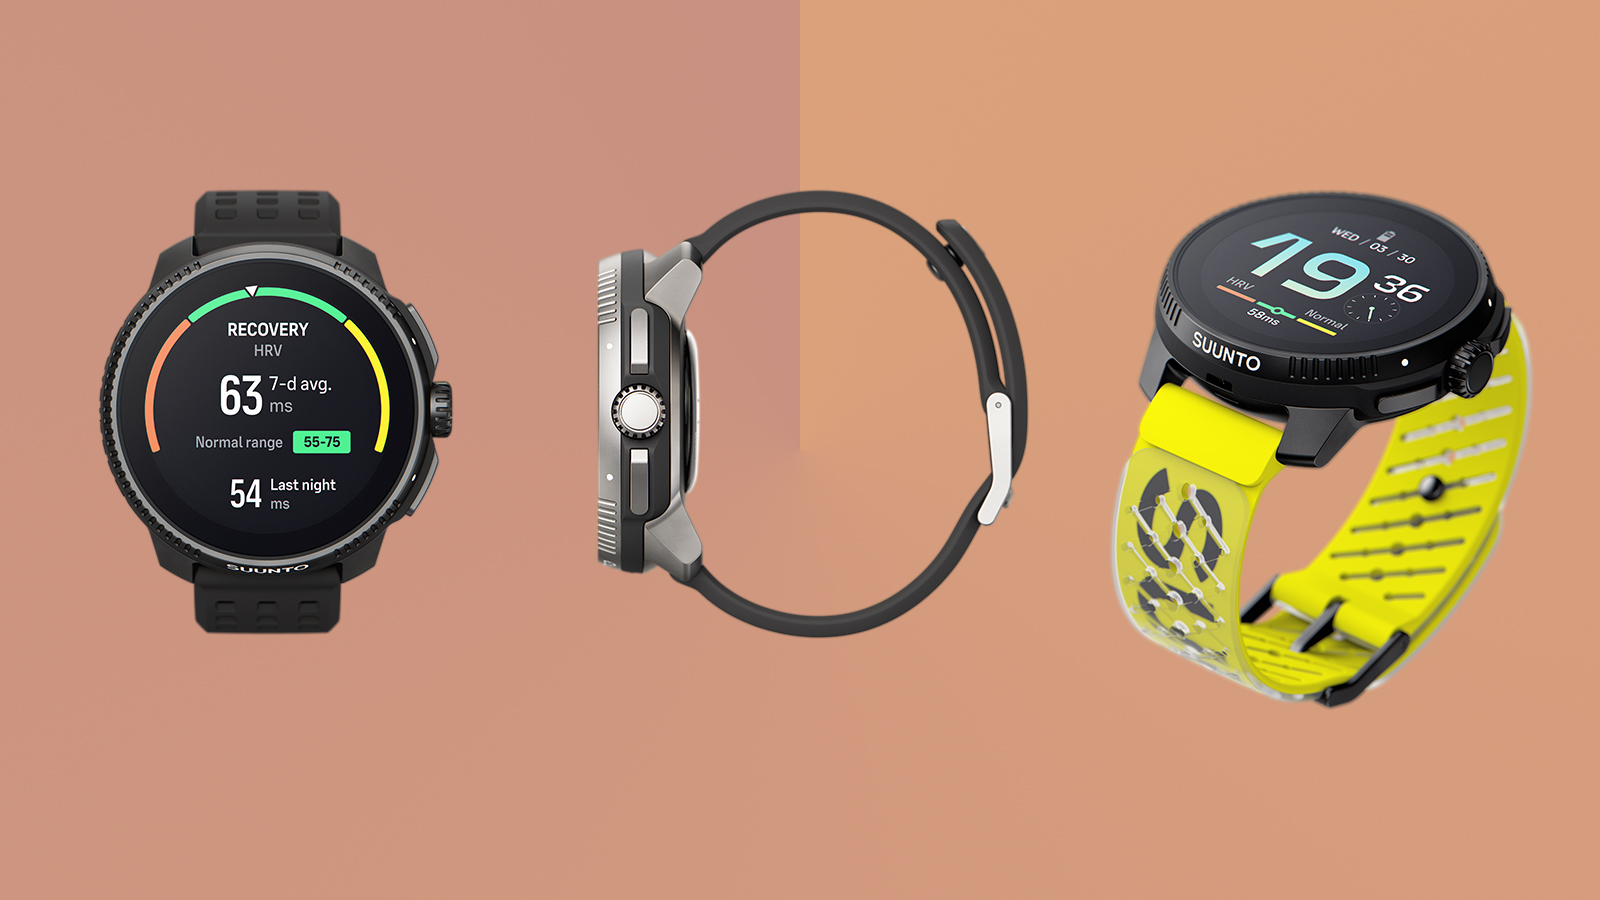 Suunto Race is the Finnish wearable brand's first GPS running